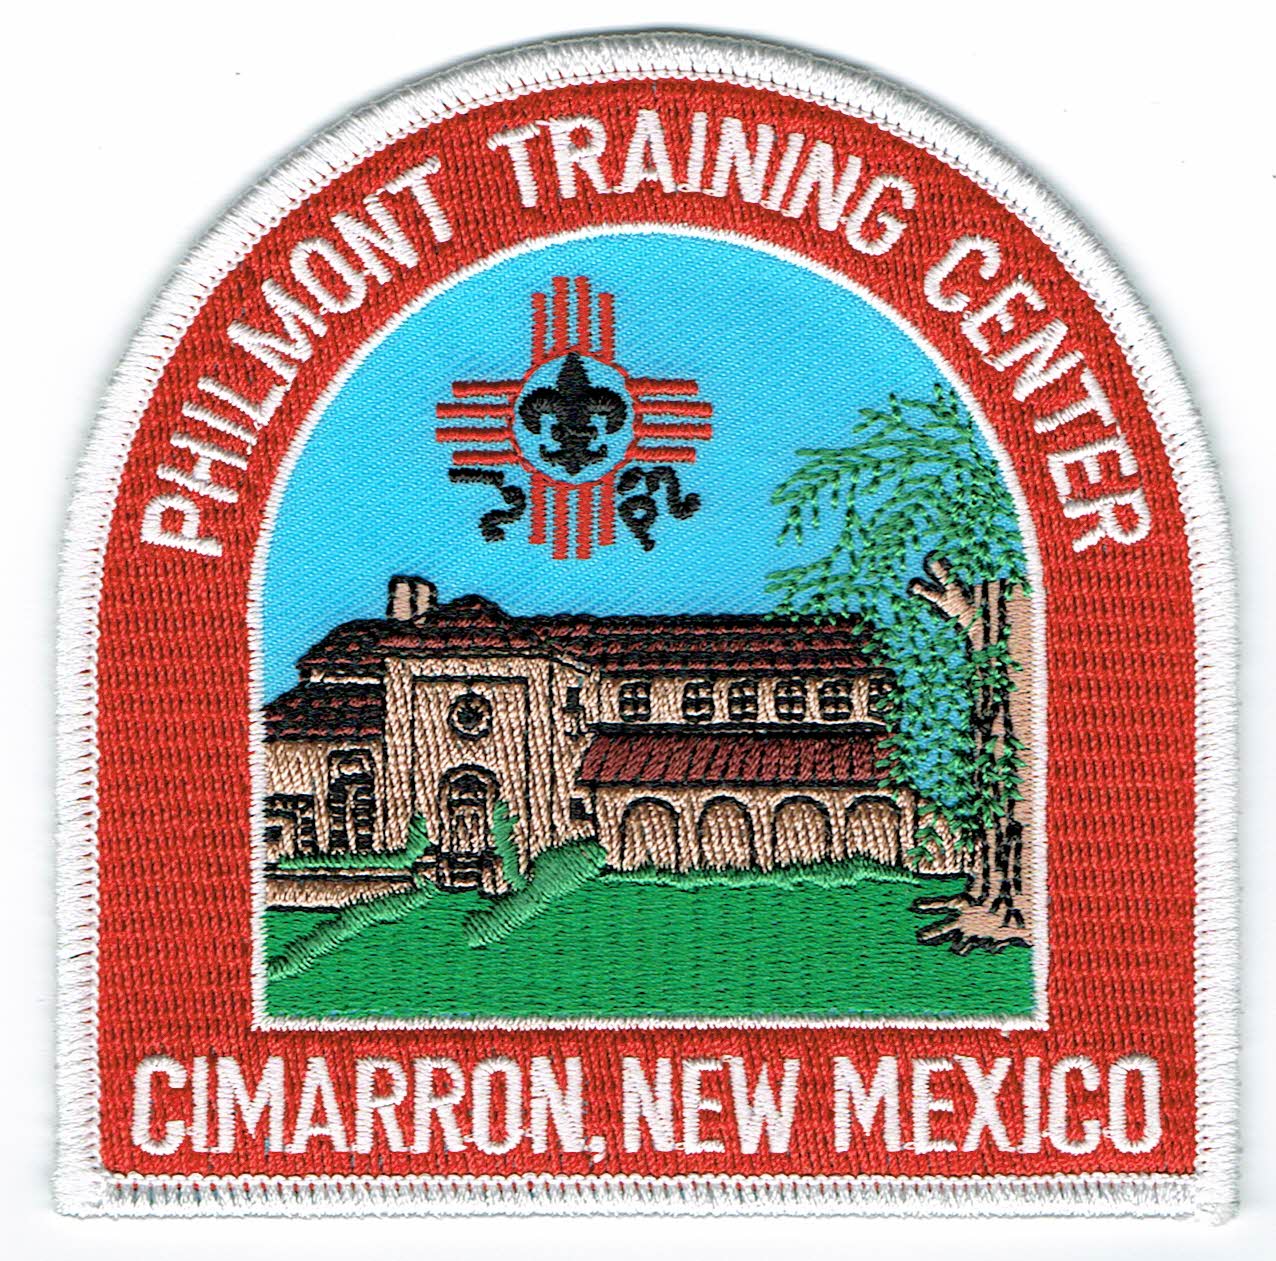 Philmont Training Center Cimarron, New Mexico patch image